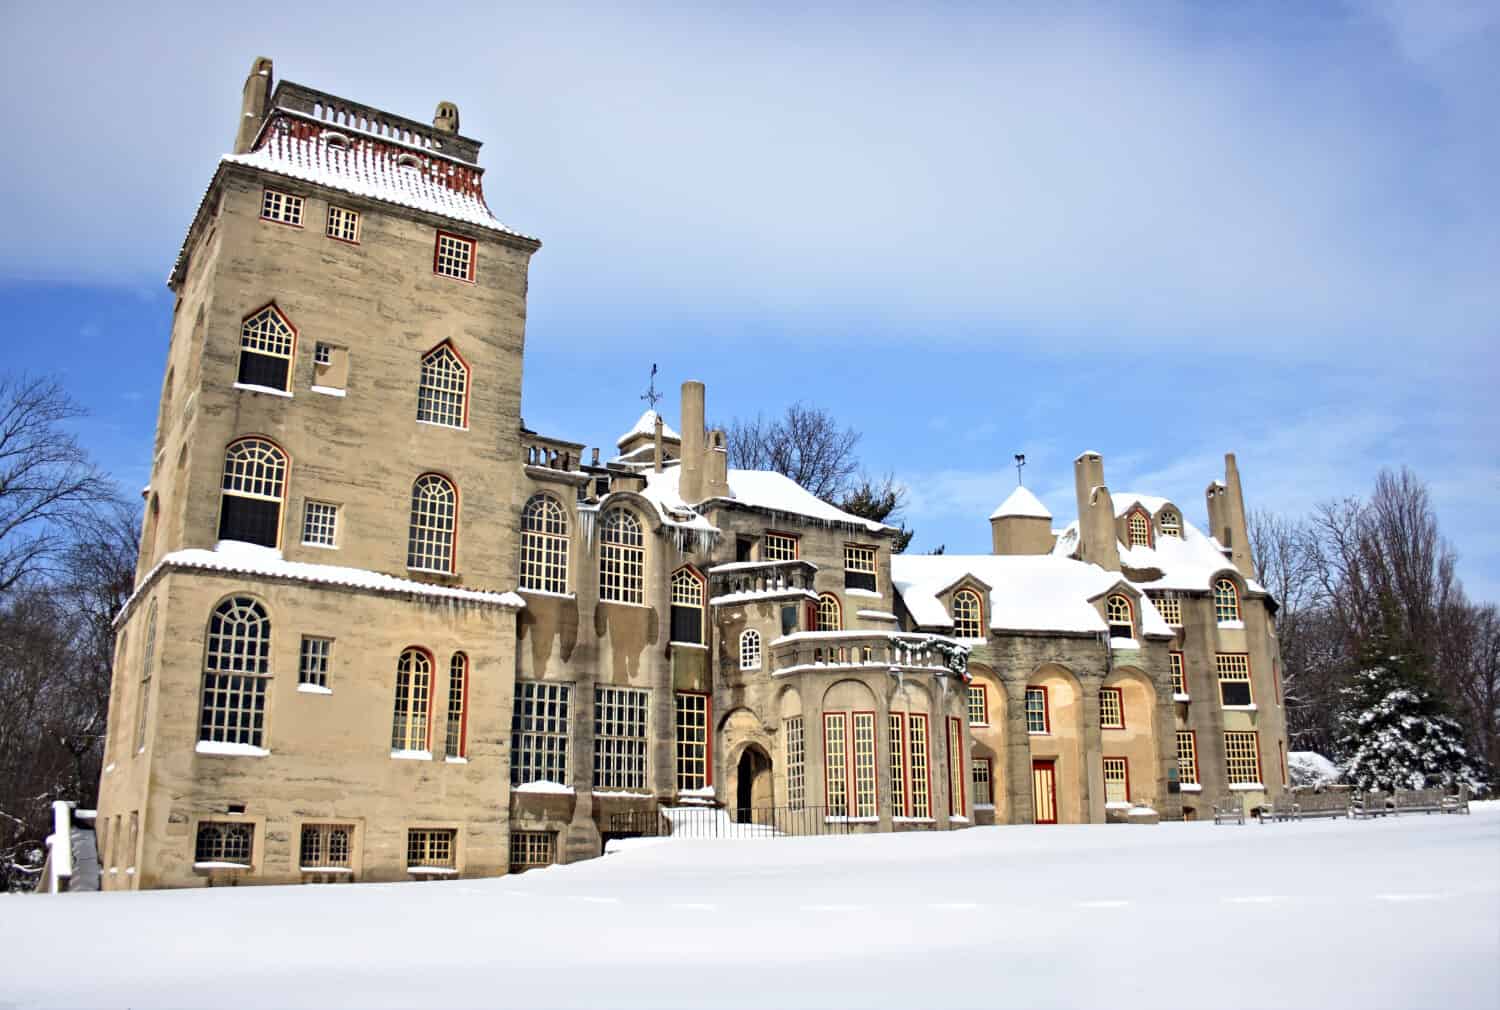 A castle after a snowfall